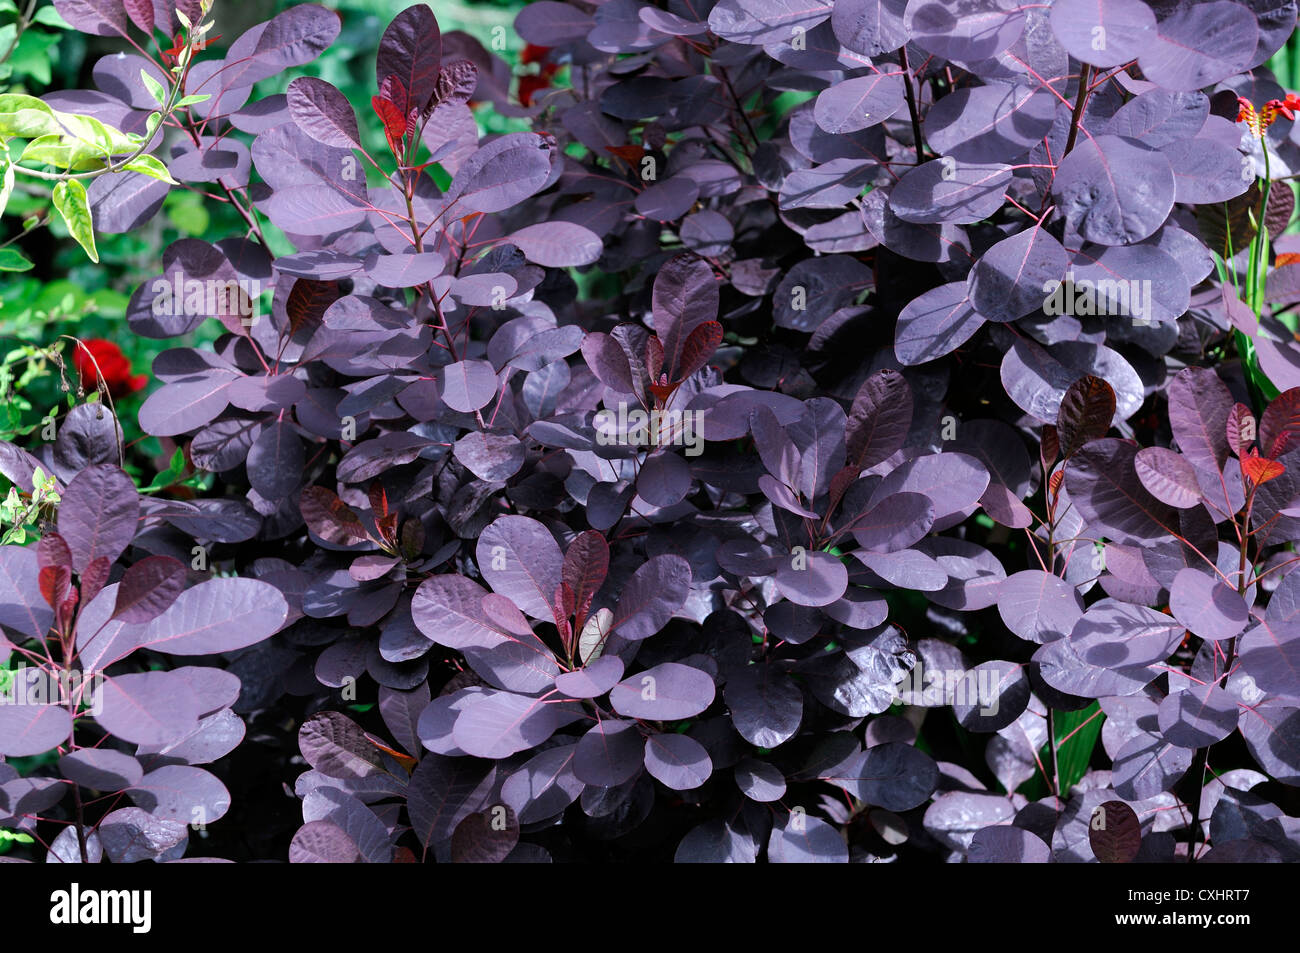 Cotinus Coggygria royal purple smoke Bush Closeup plant Porträts ...